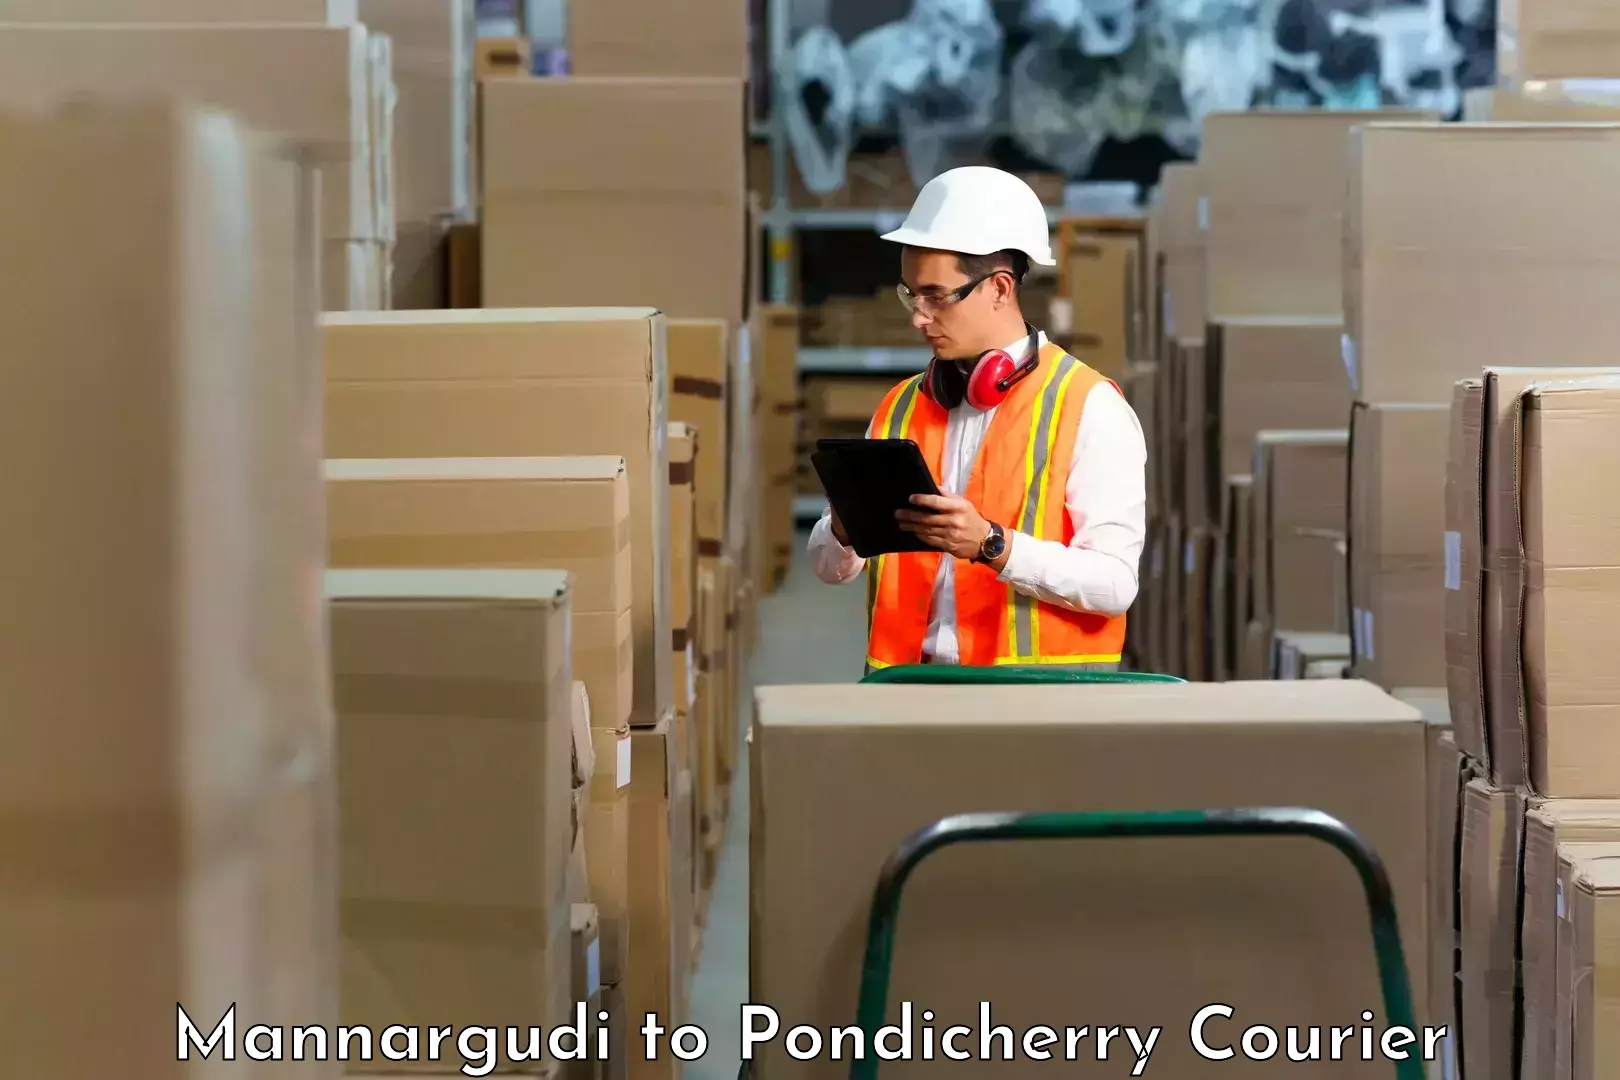 User-friendly delivery service Mannargudi to Pondicherry